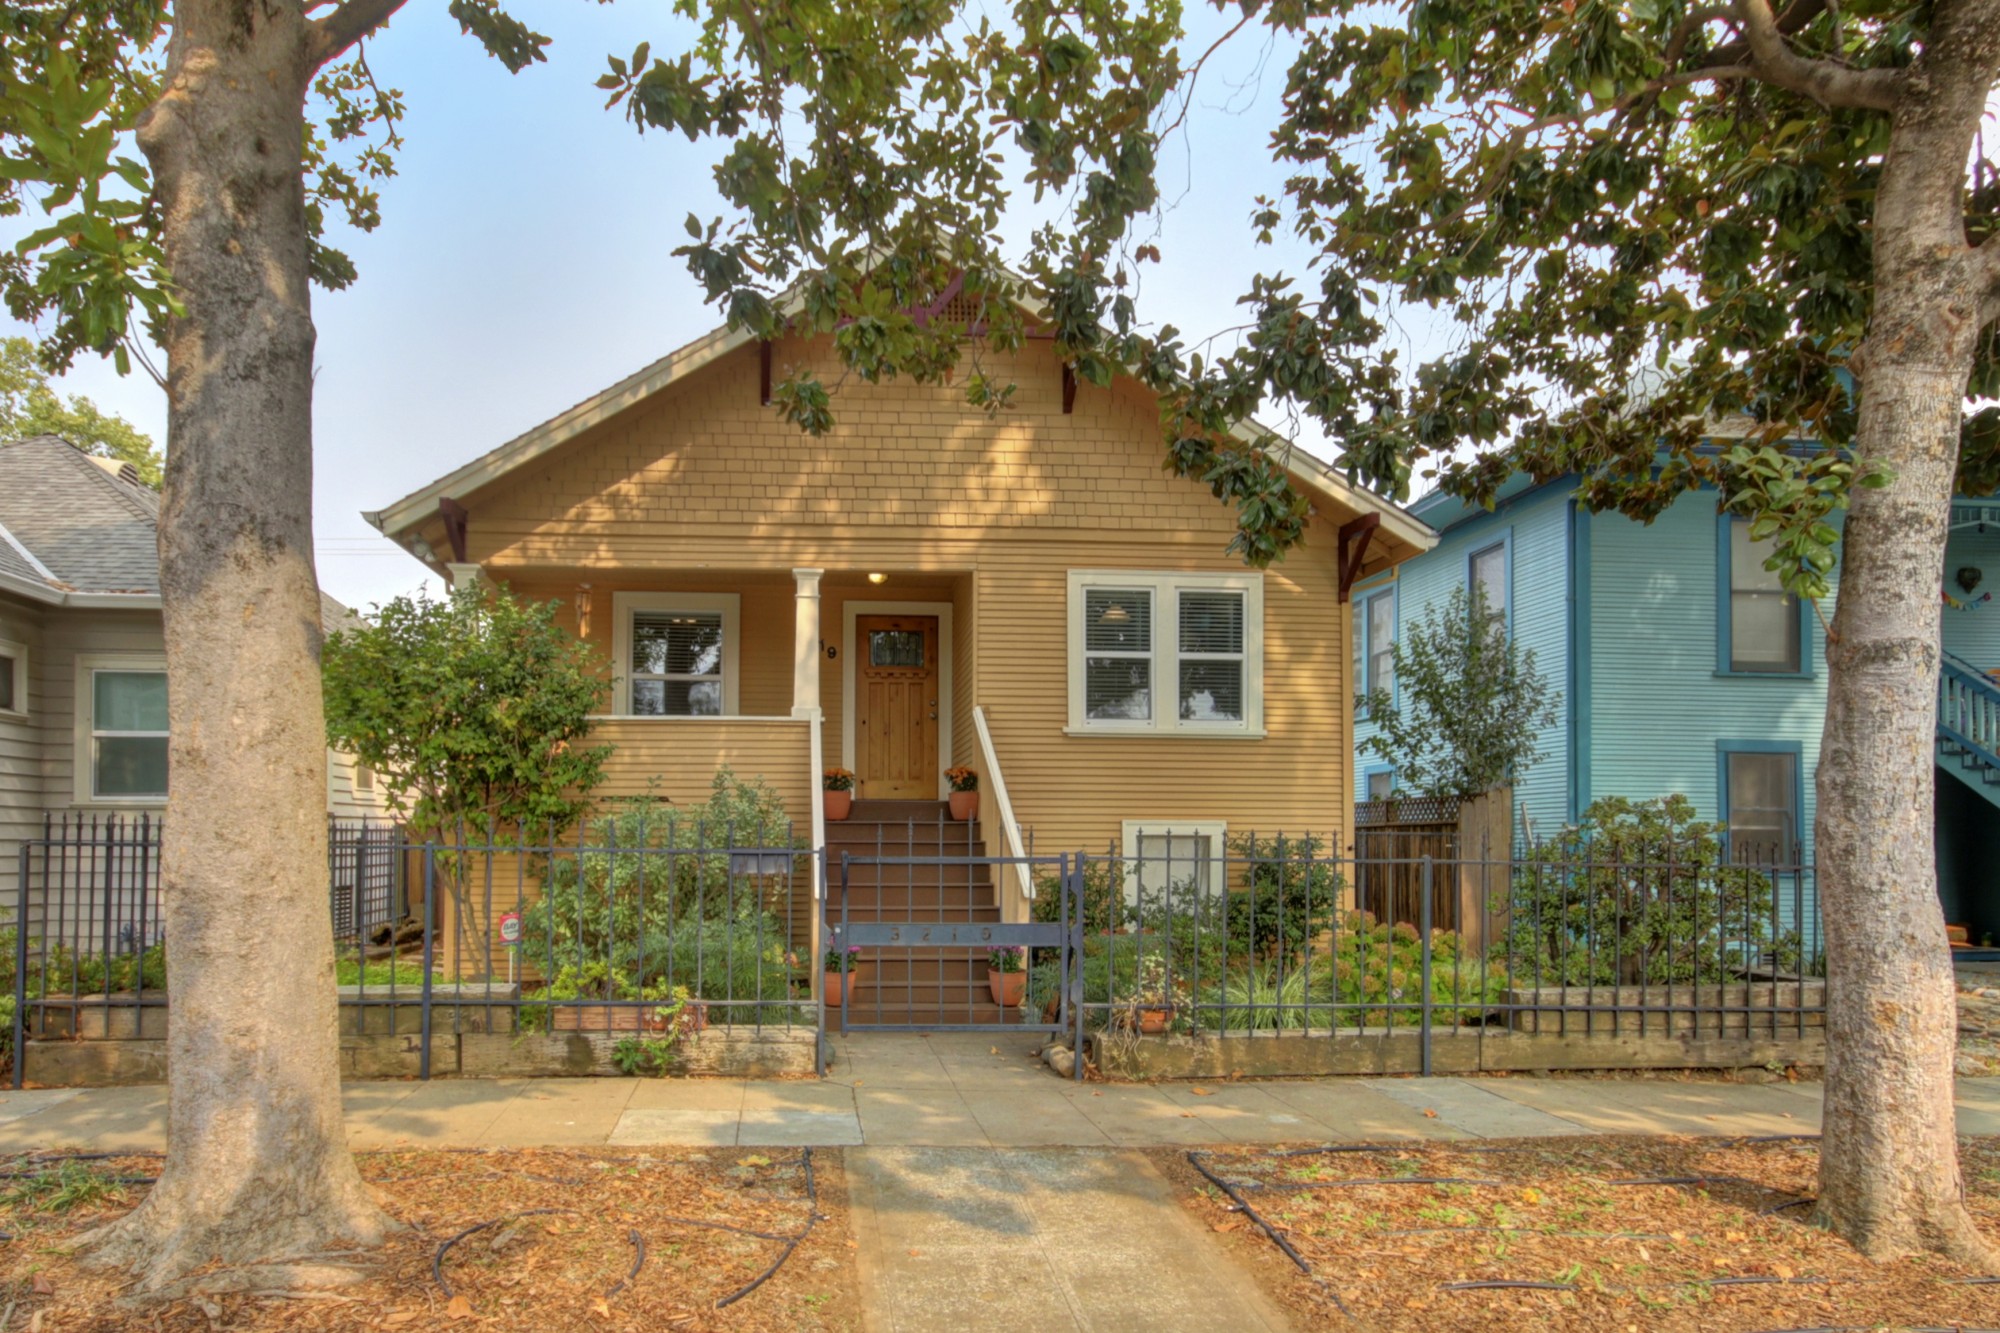 42 HQ Images Estate Sales Appraisals Sacramento Ca : MLS# 18076363 - 8475 Sunnybrae Drive, Sacramento, CA 95823 ...